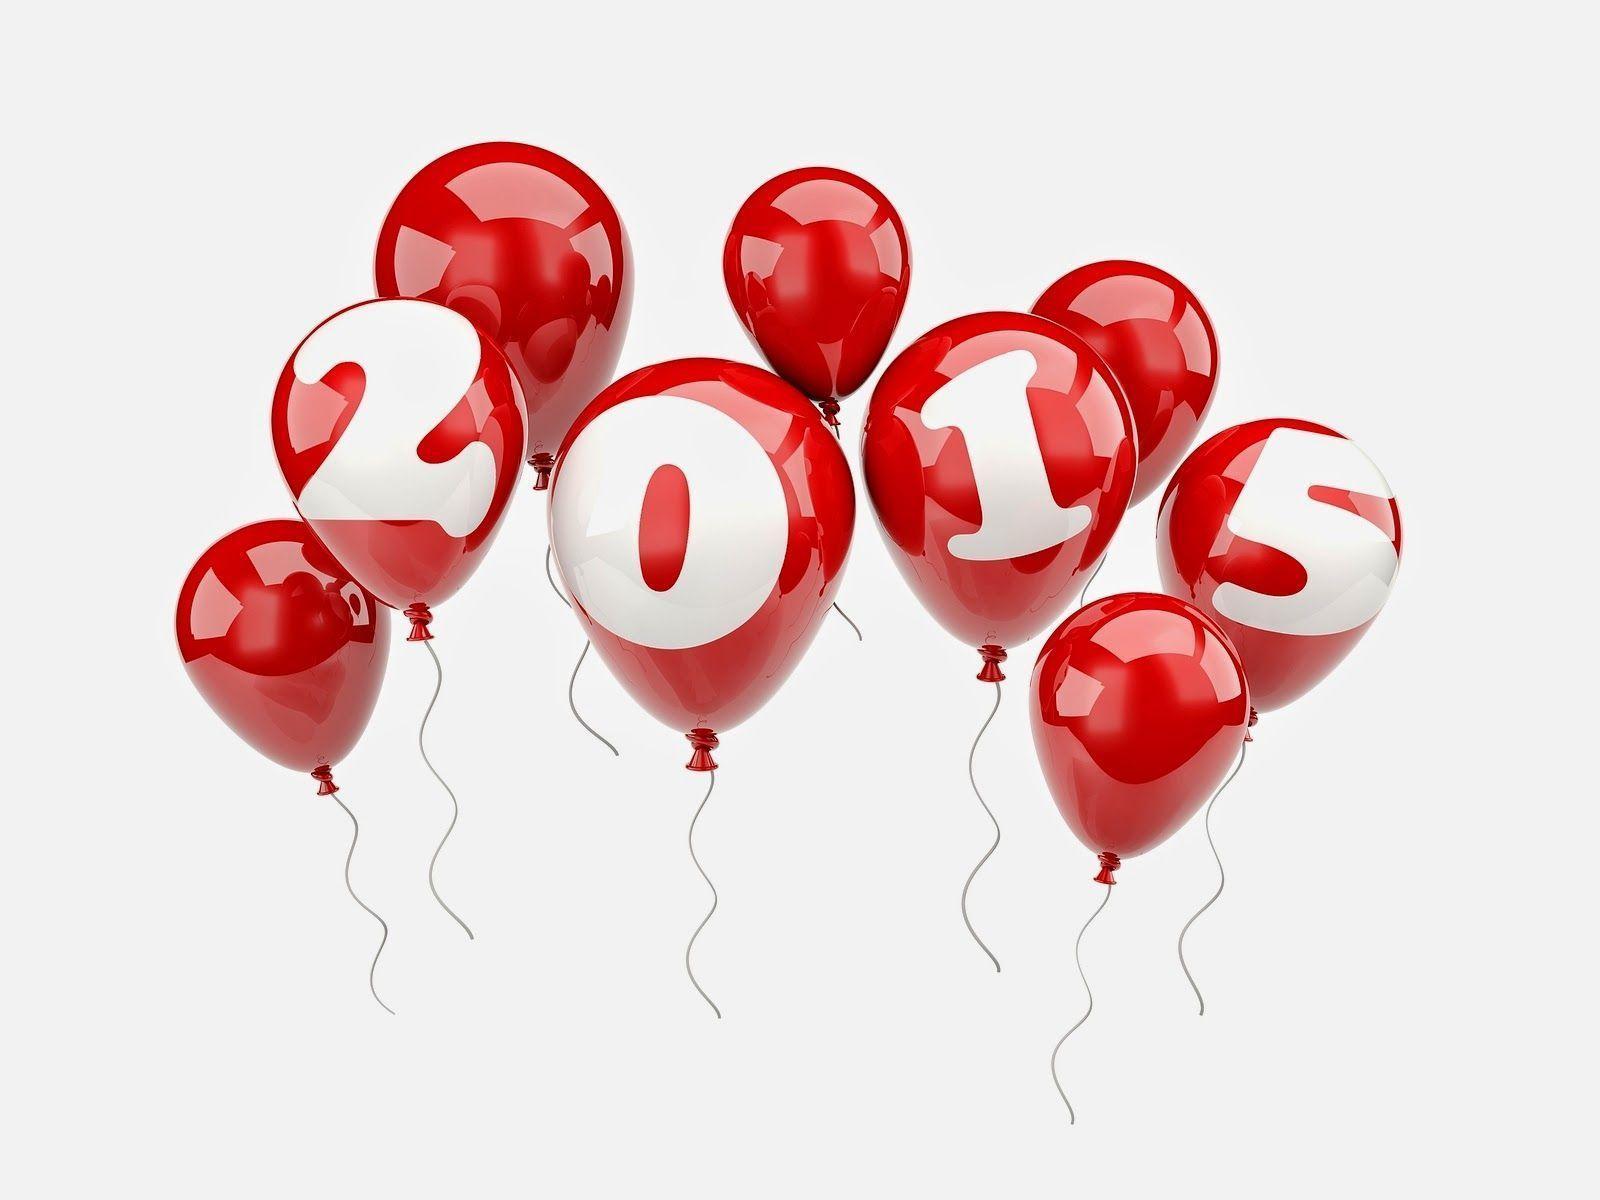 Happy New Year 2015: Family Health & Healing. Janice M. Bell, RN, PhD